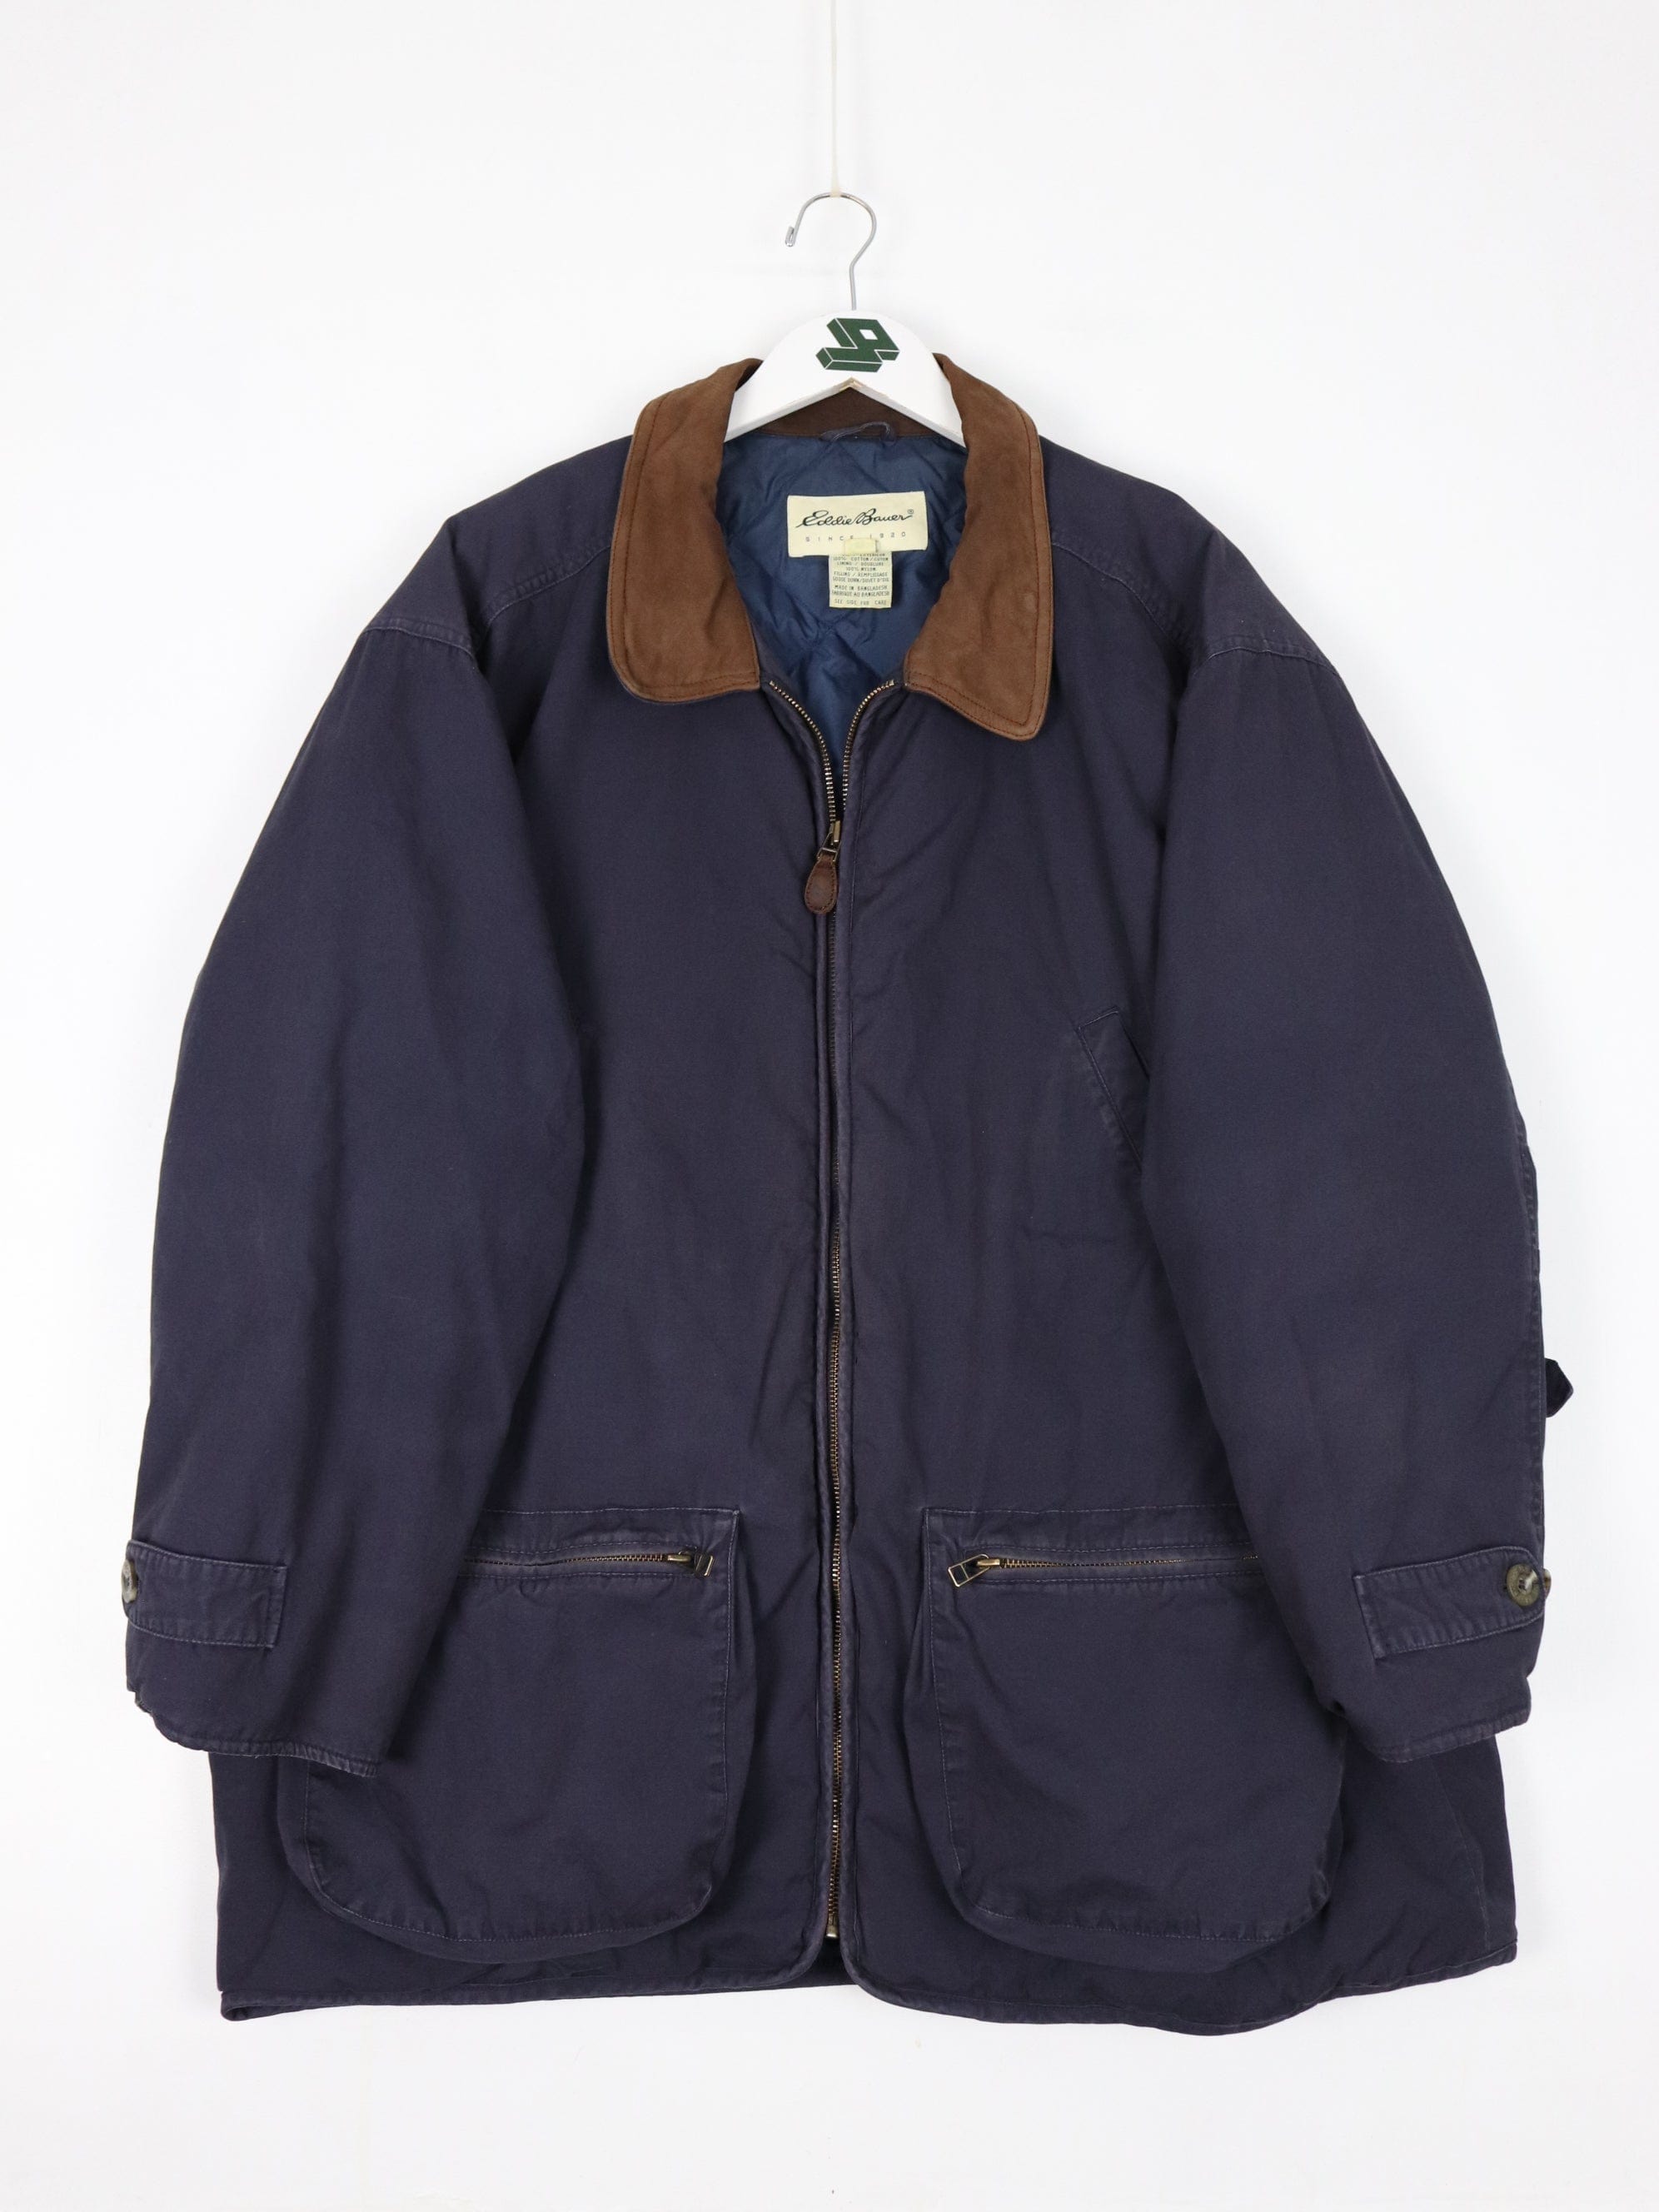 Vintage Eddie Bauer Jacket Mens XL Purple Goose Down Coat Parka